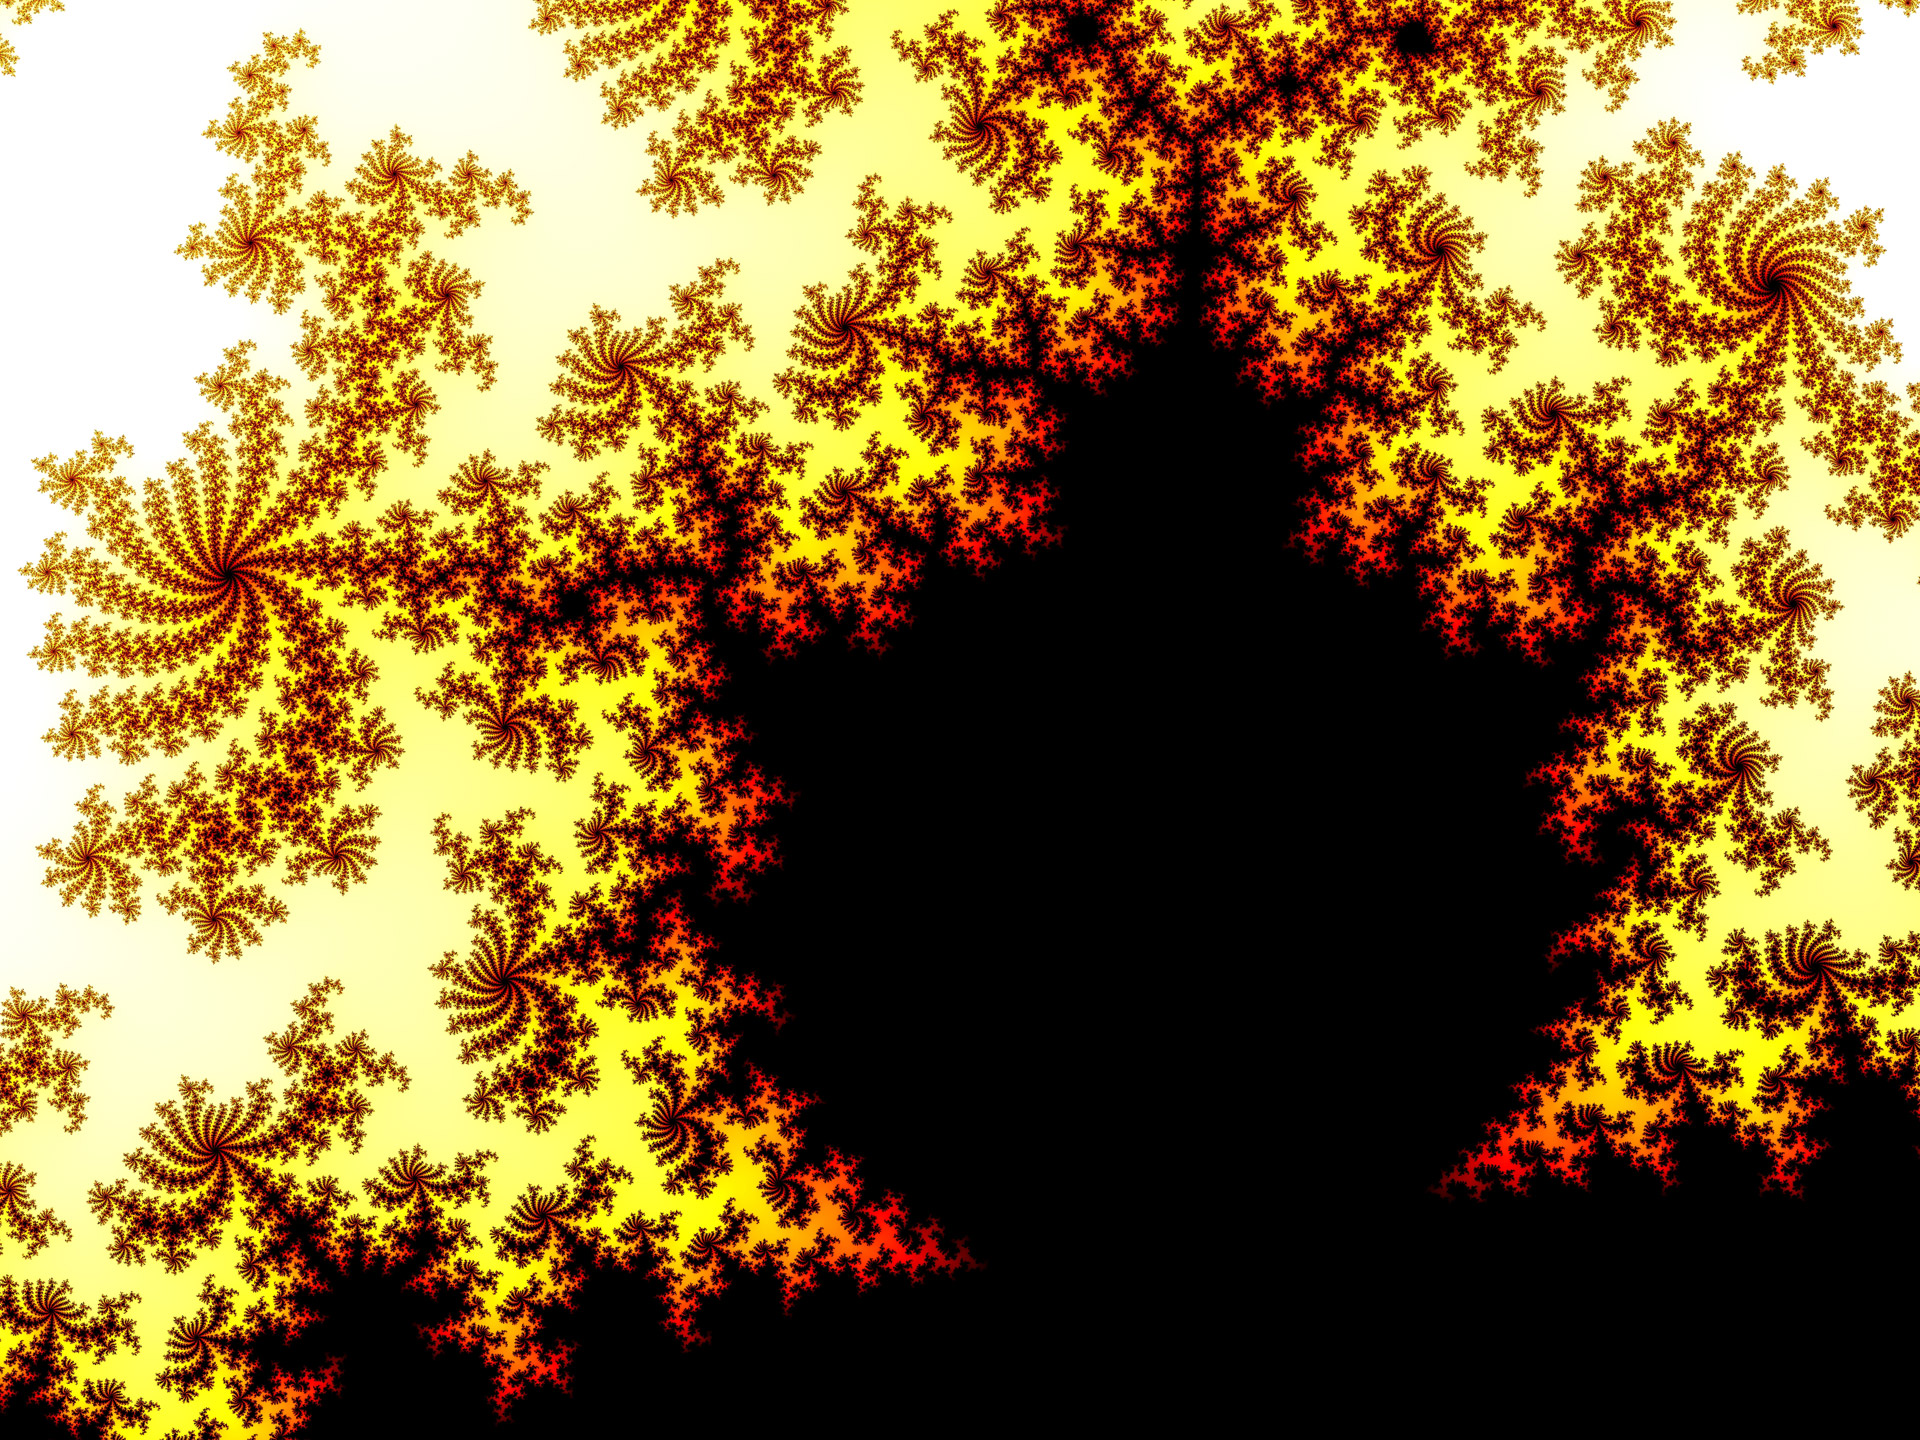 fractal-001-free-stock-photo-public-domain-pictures